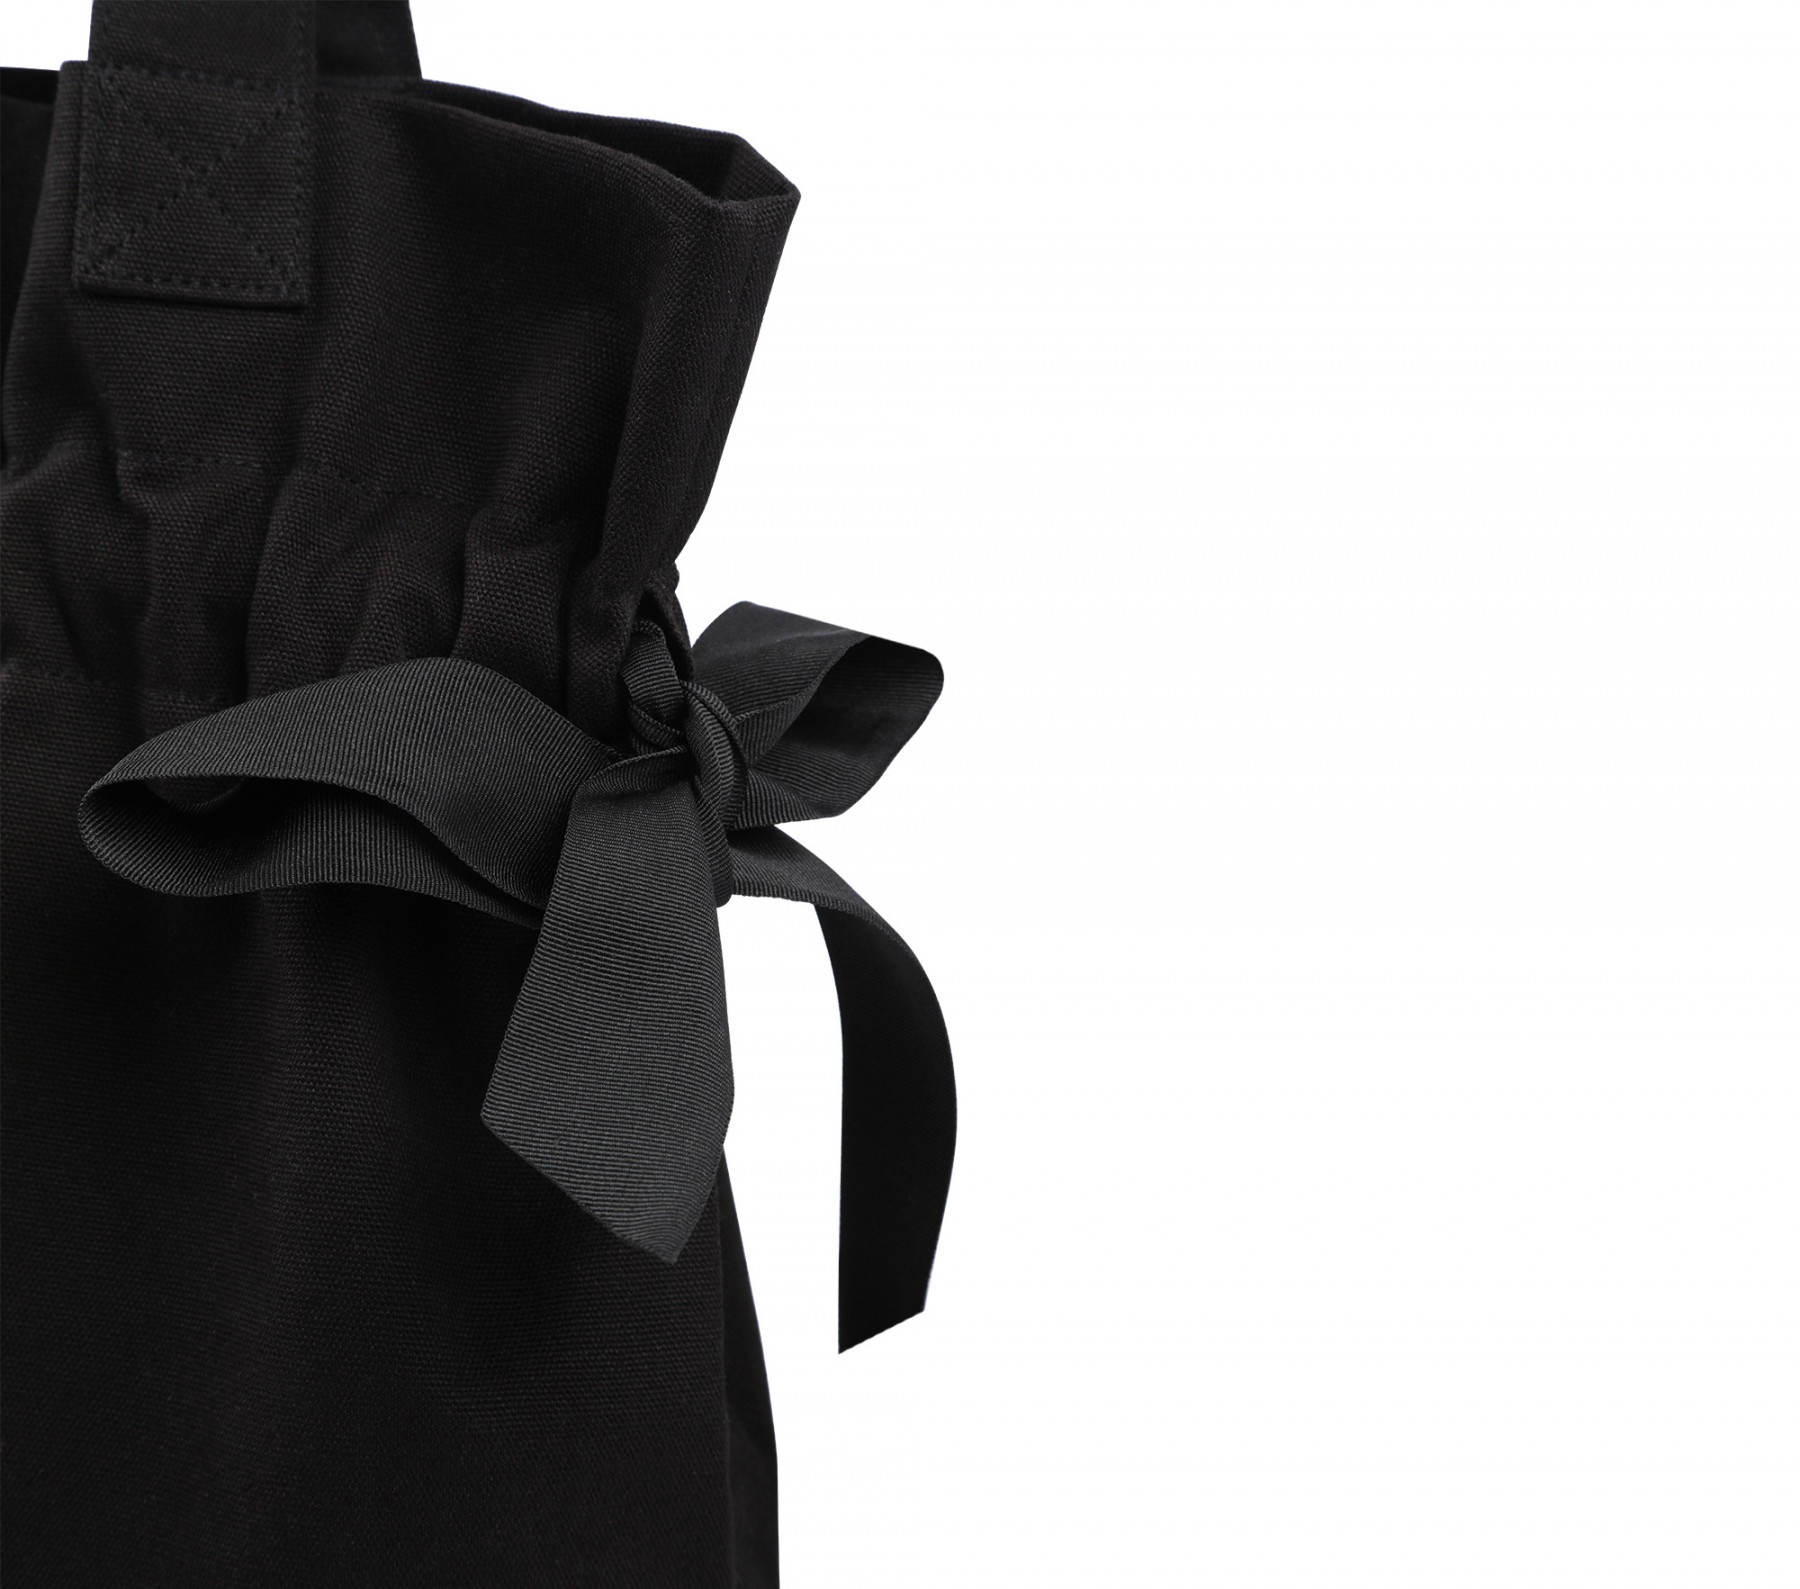 Tutu lover shopping bag with ribbons - 5